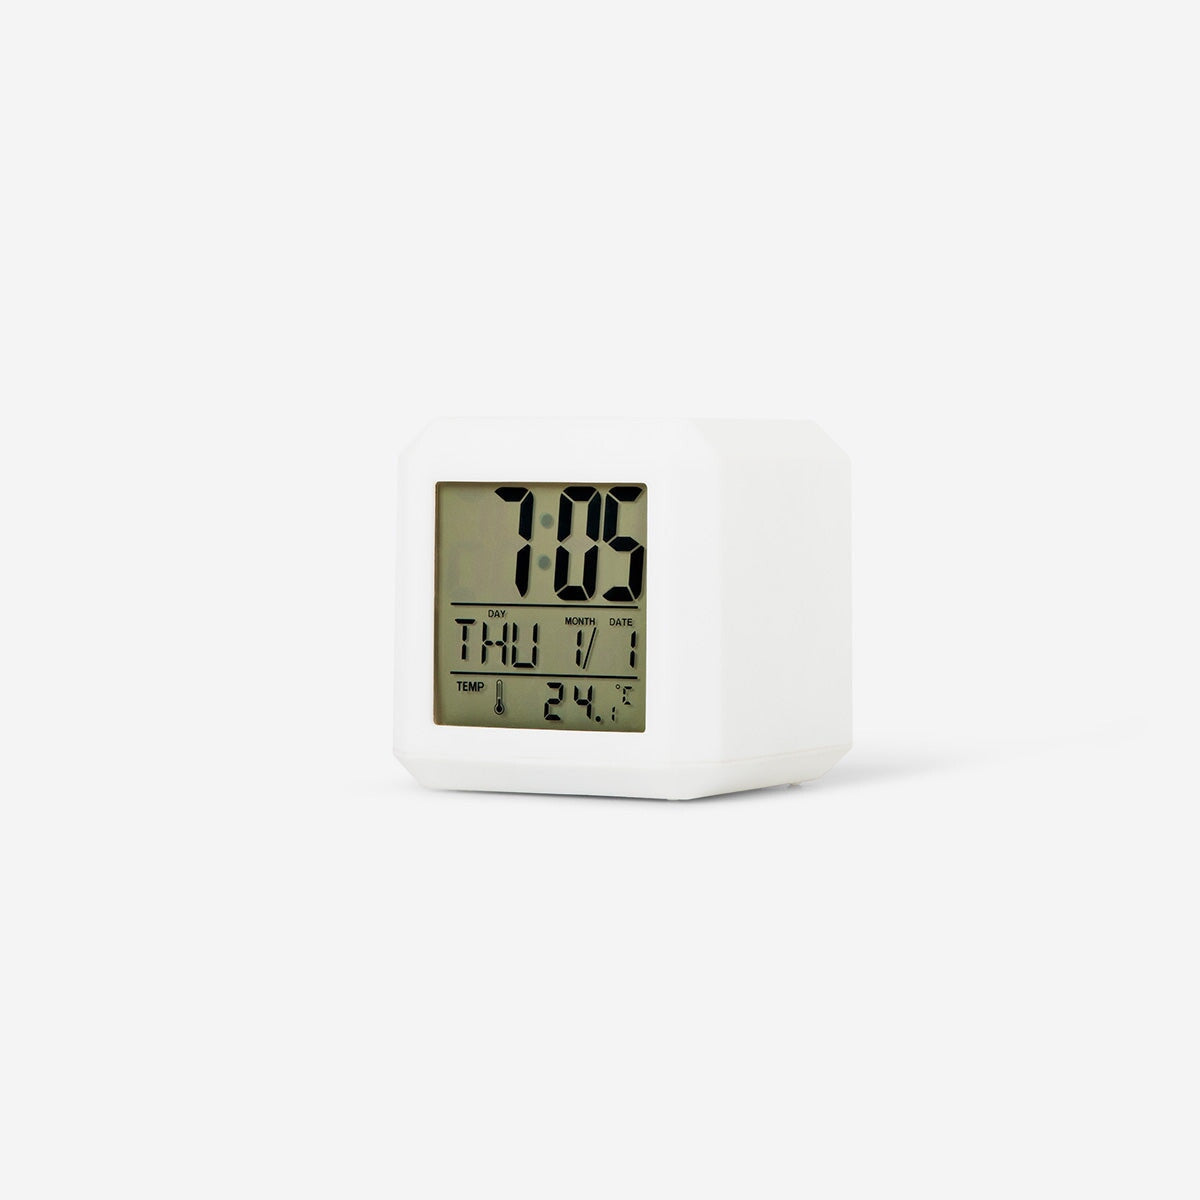 Digital alarm clock. Changes colour Gadget Flying Tiger Copenhagen 